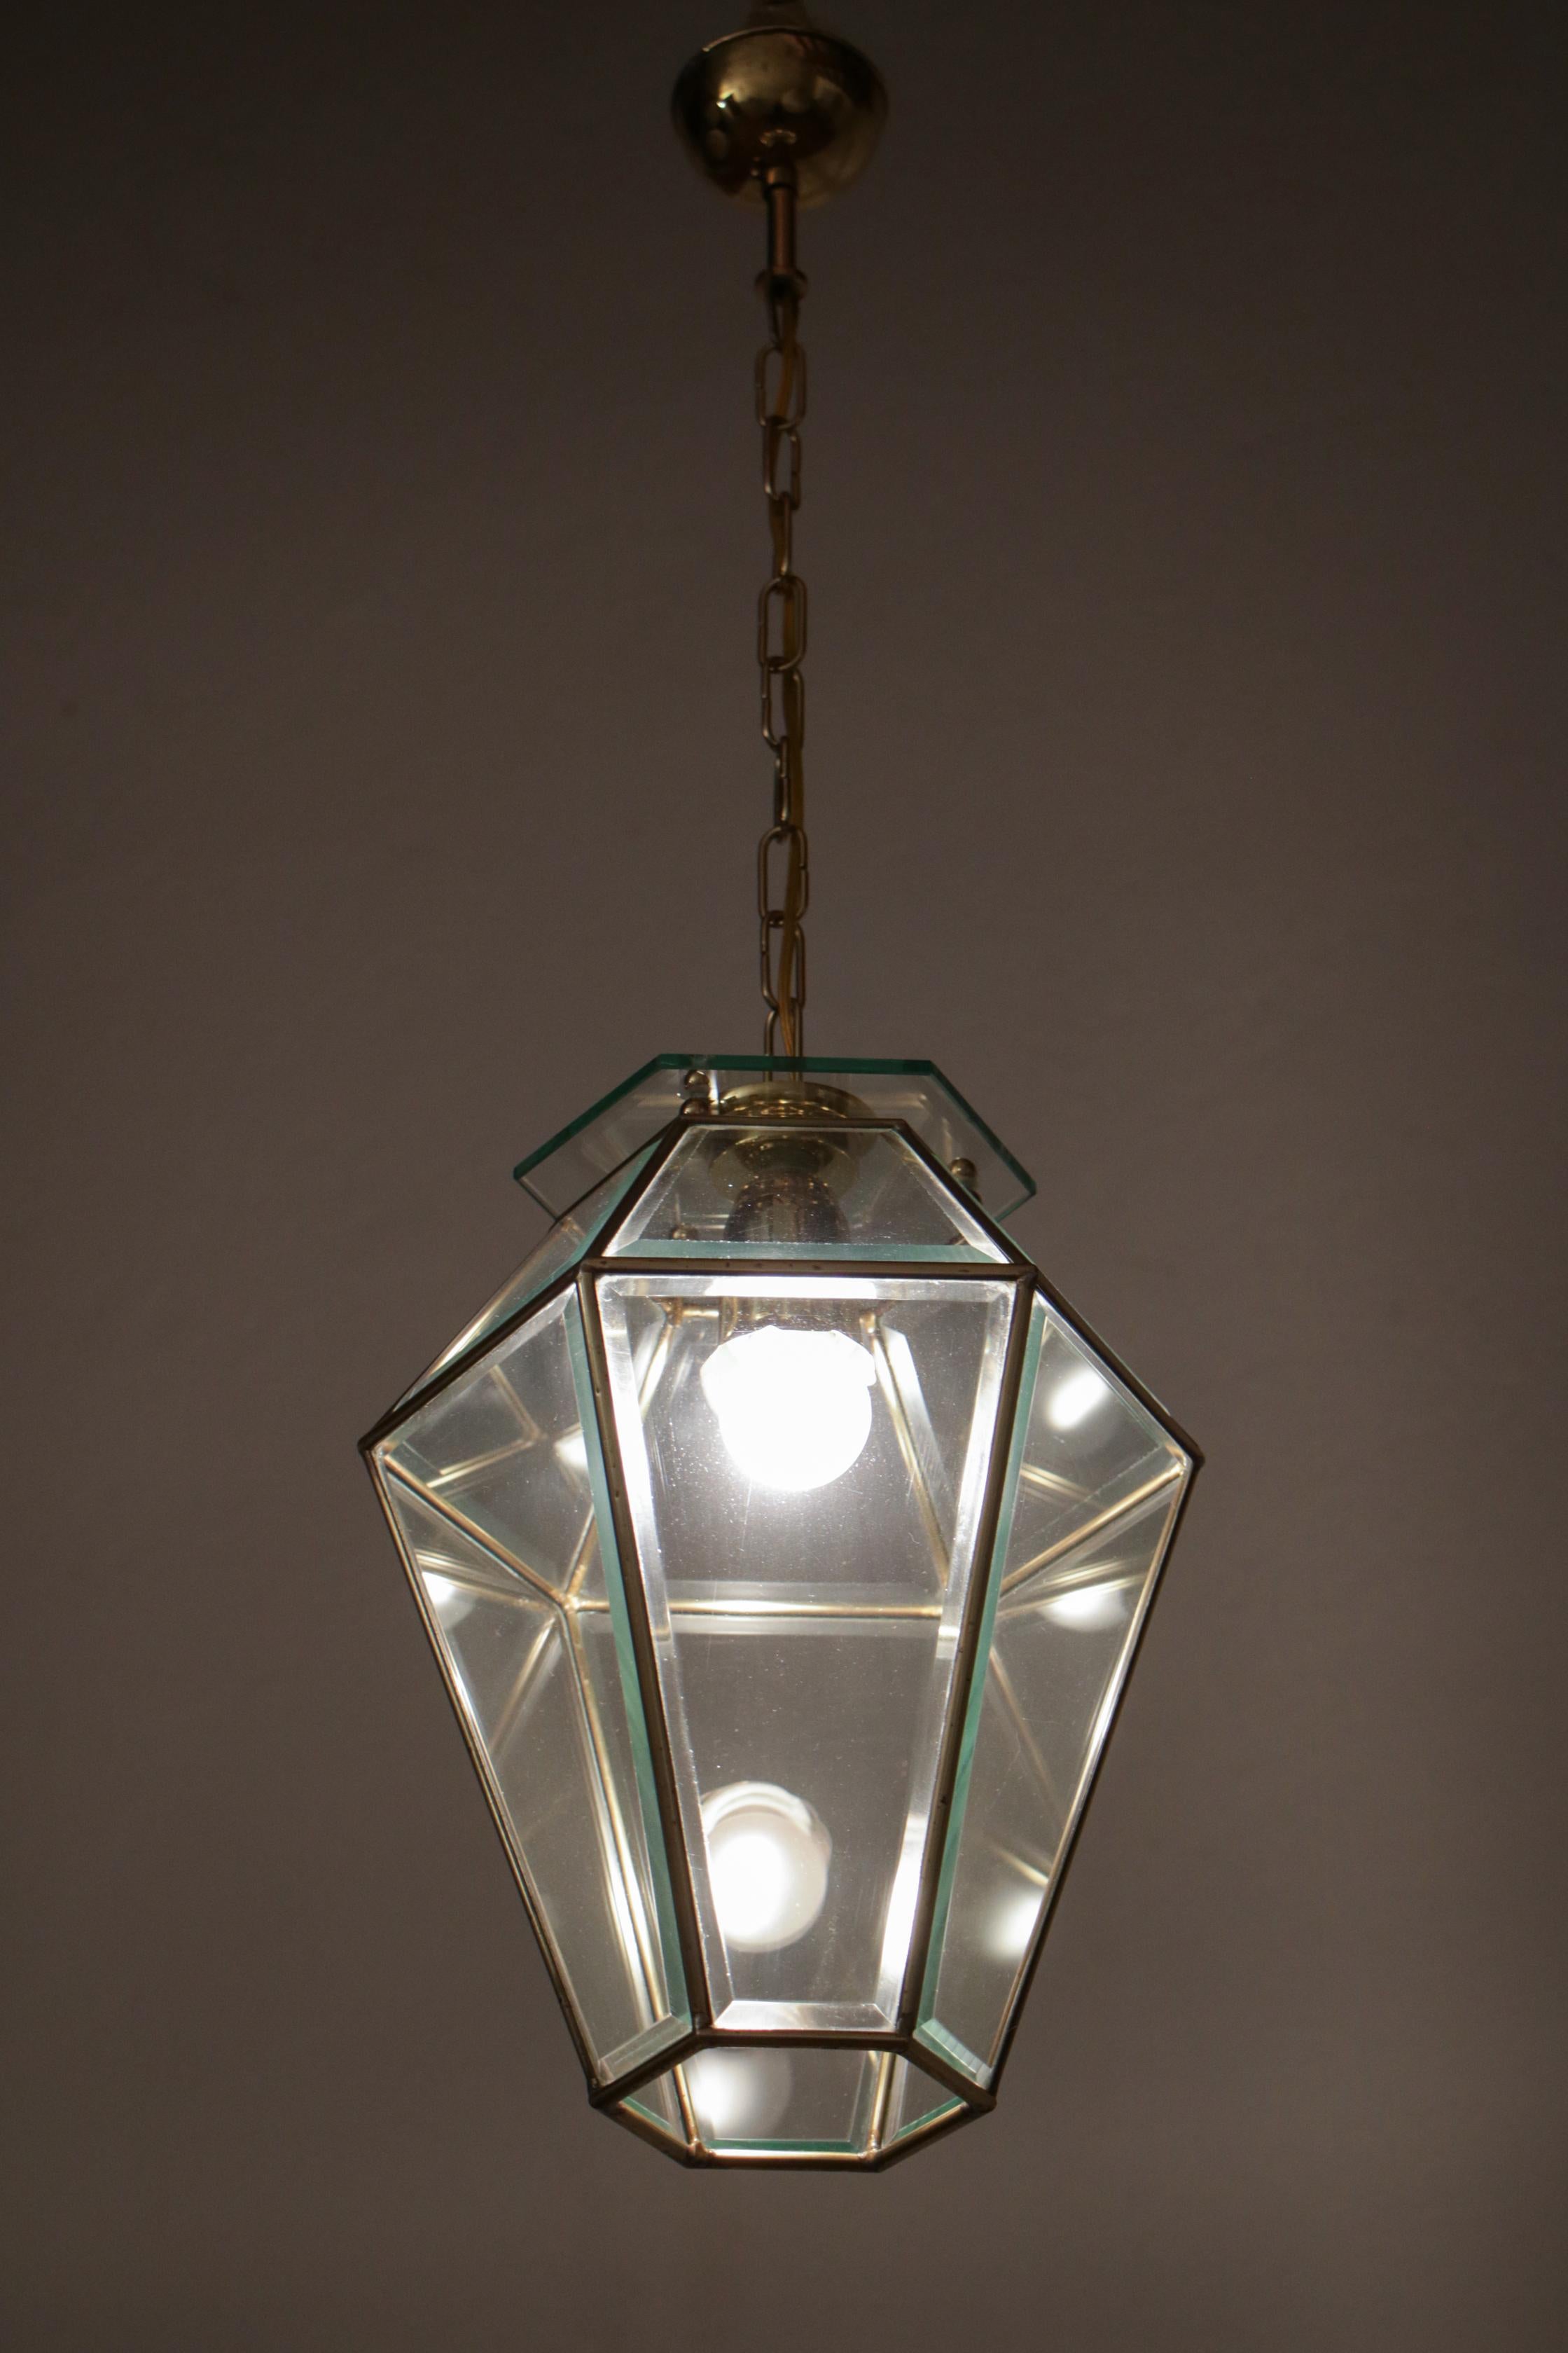 Italian Midcentury Lanter Pendant Lamp, Adolf Loos Style, 1950s For Sale 7